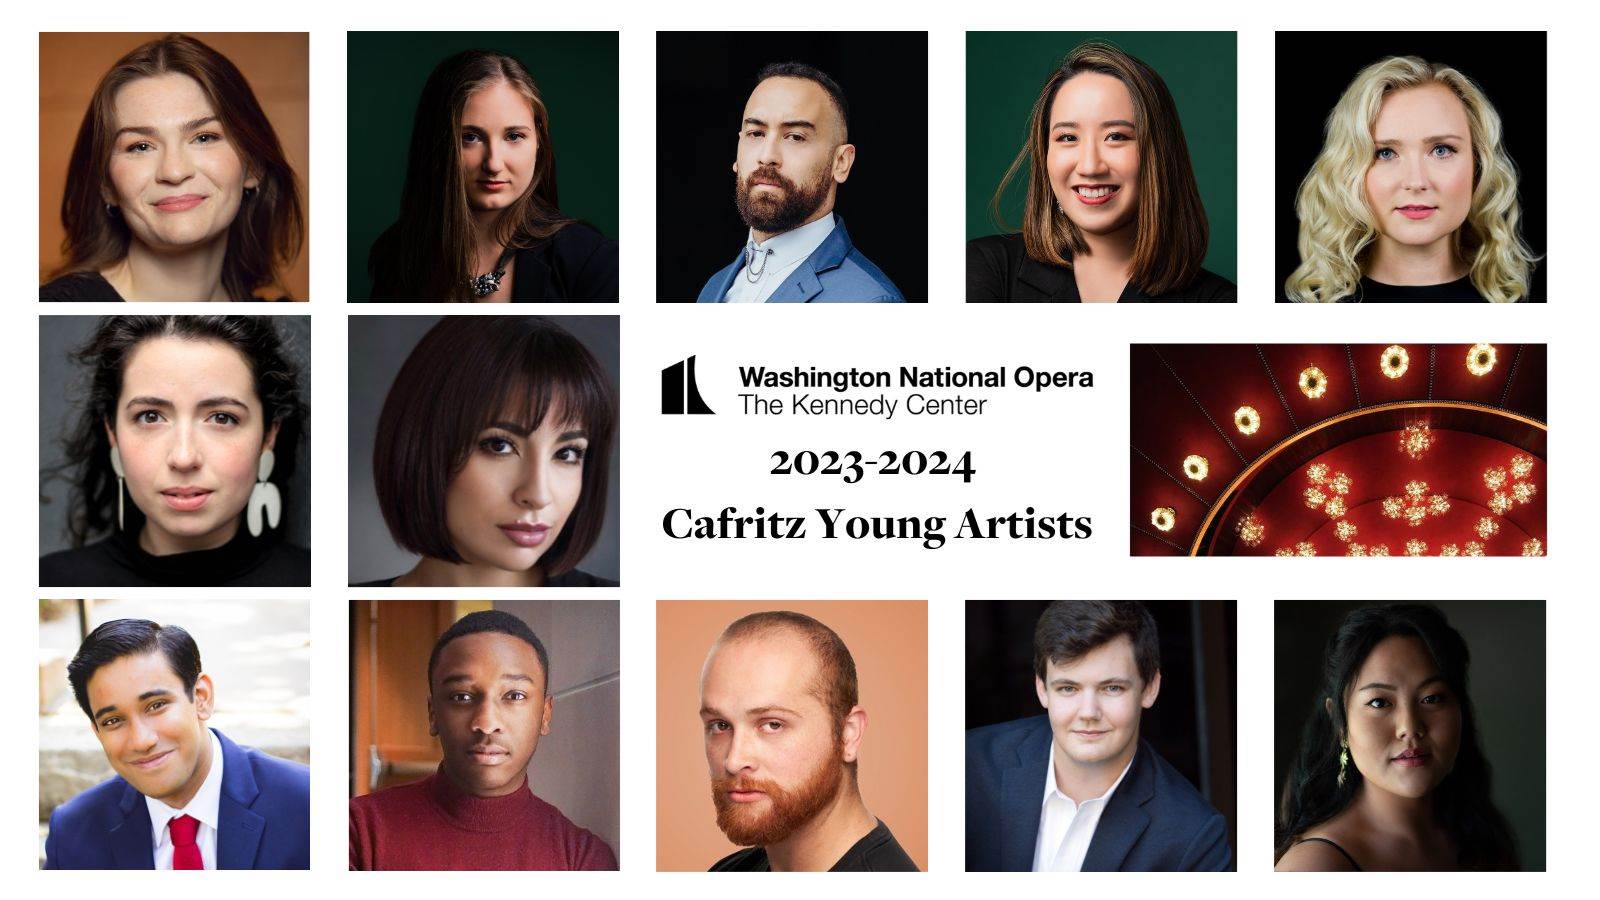 Washington National Opera 2023-2024 Cafritz Young Artists 